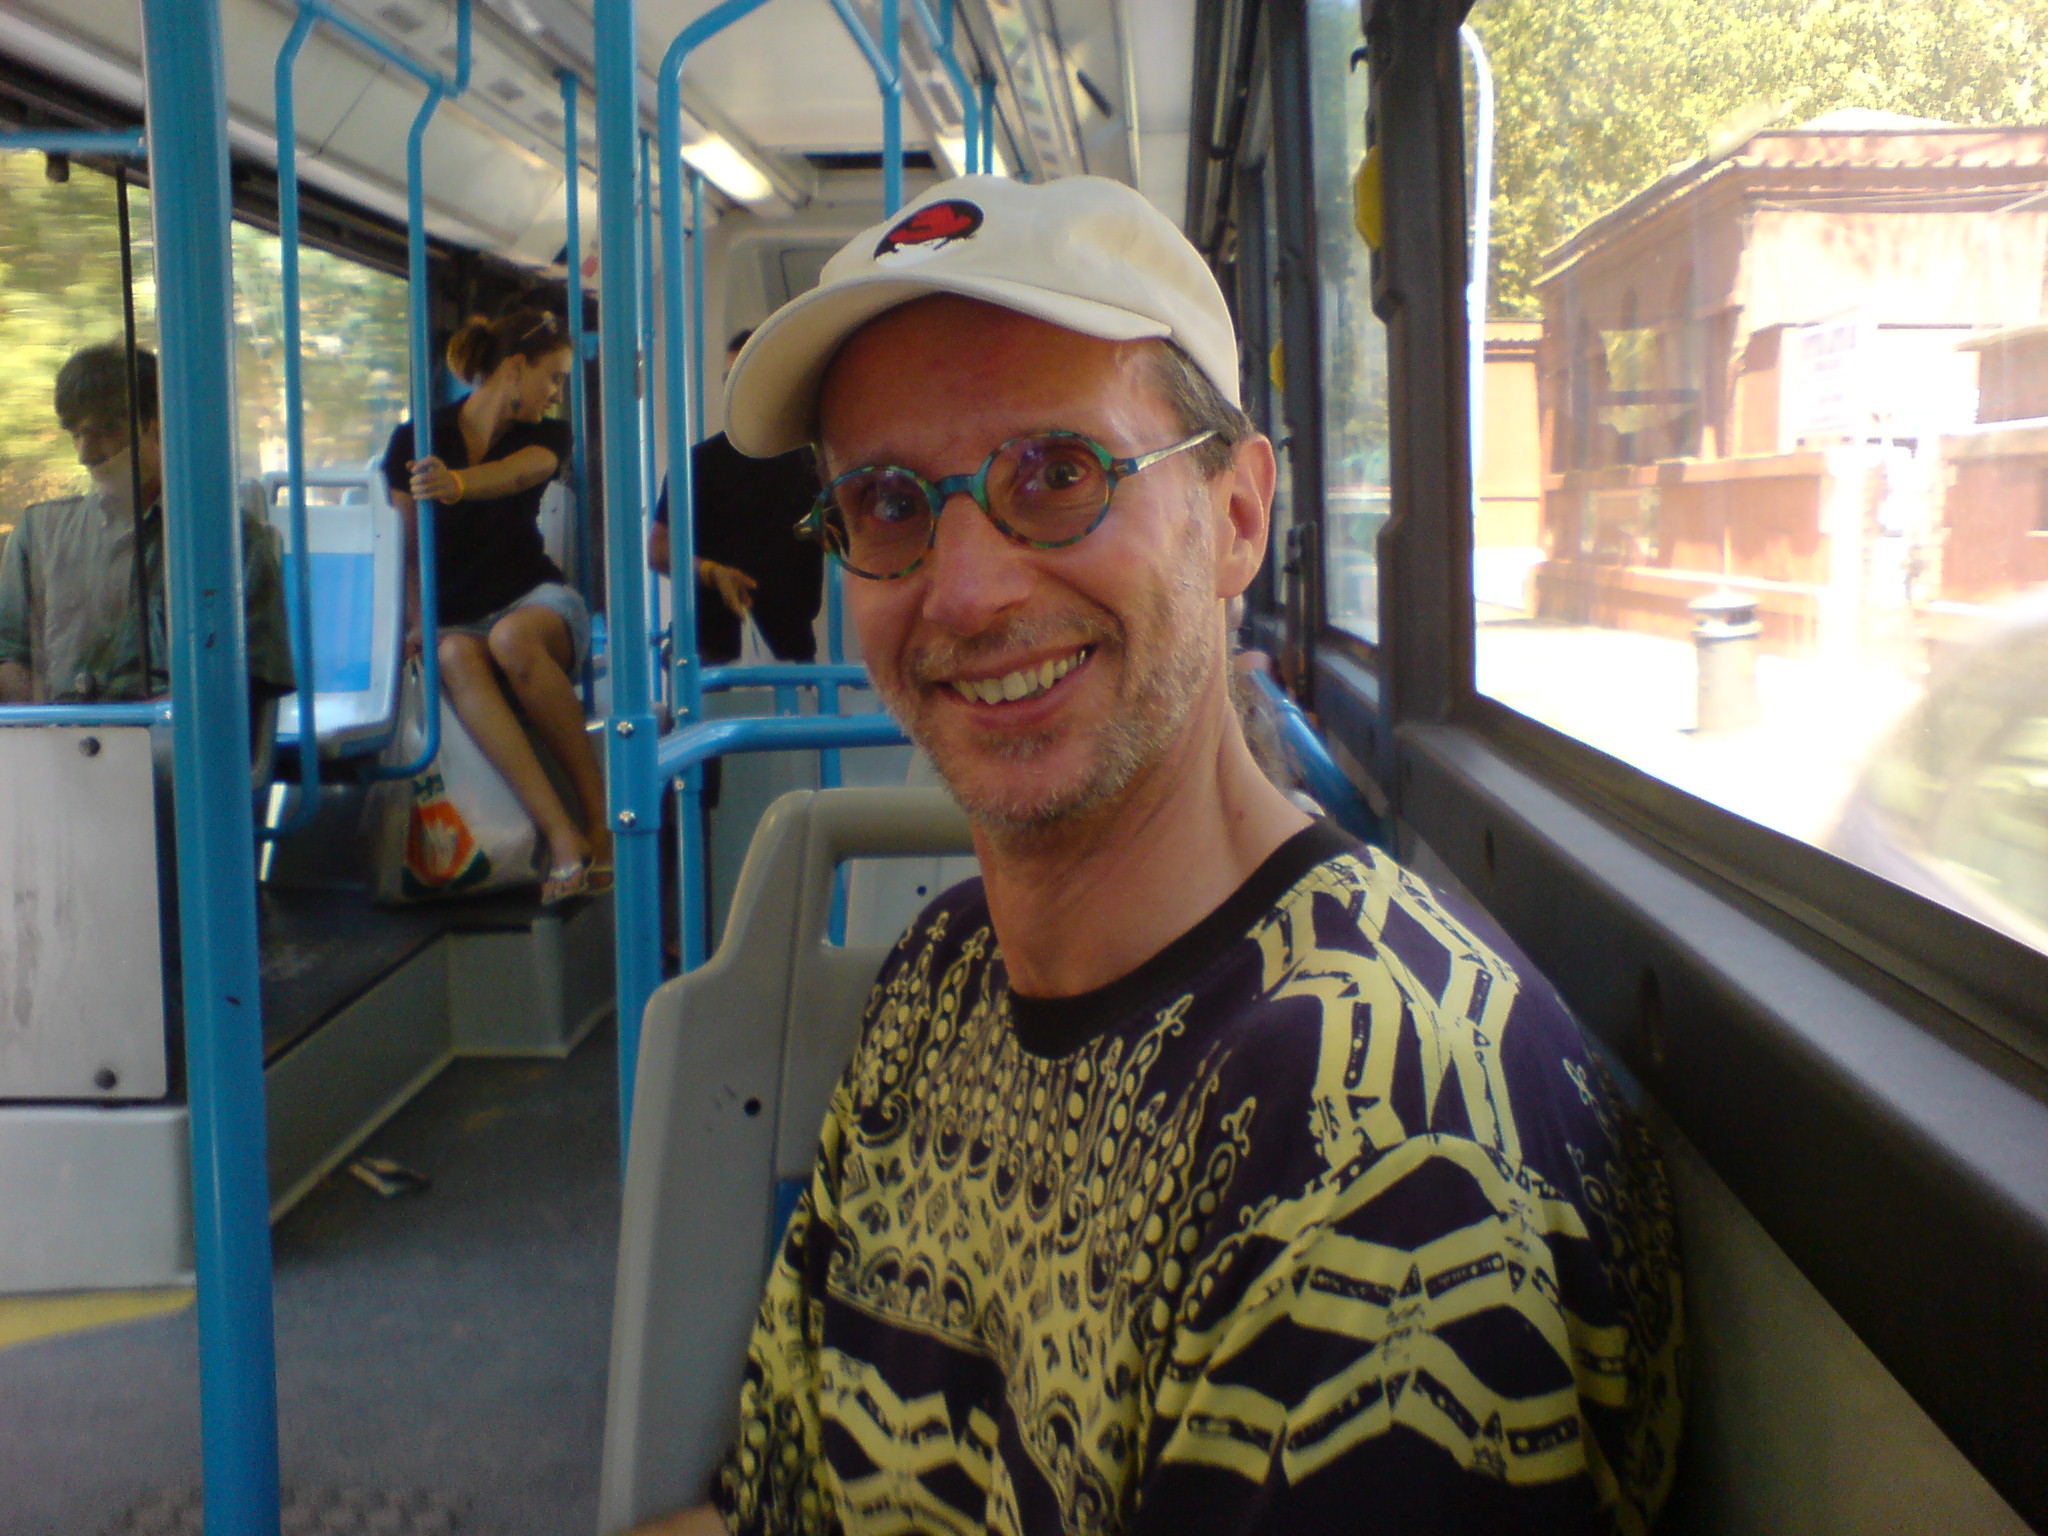 TWiki founder Peter Thoeny in bus